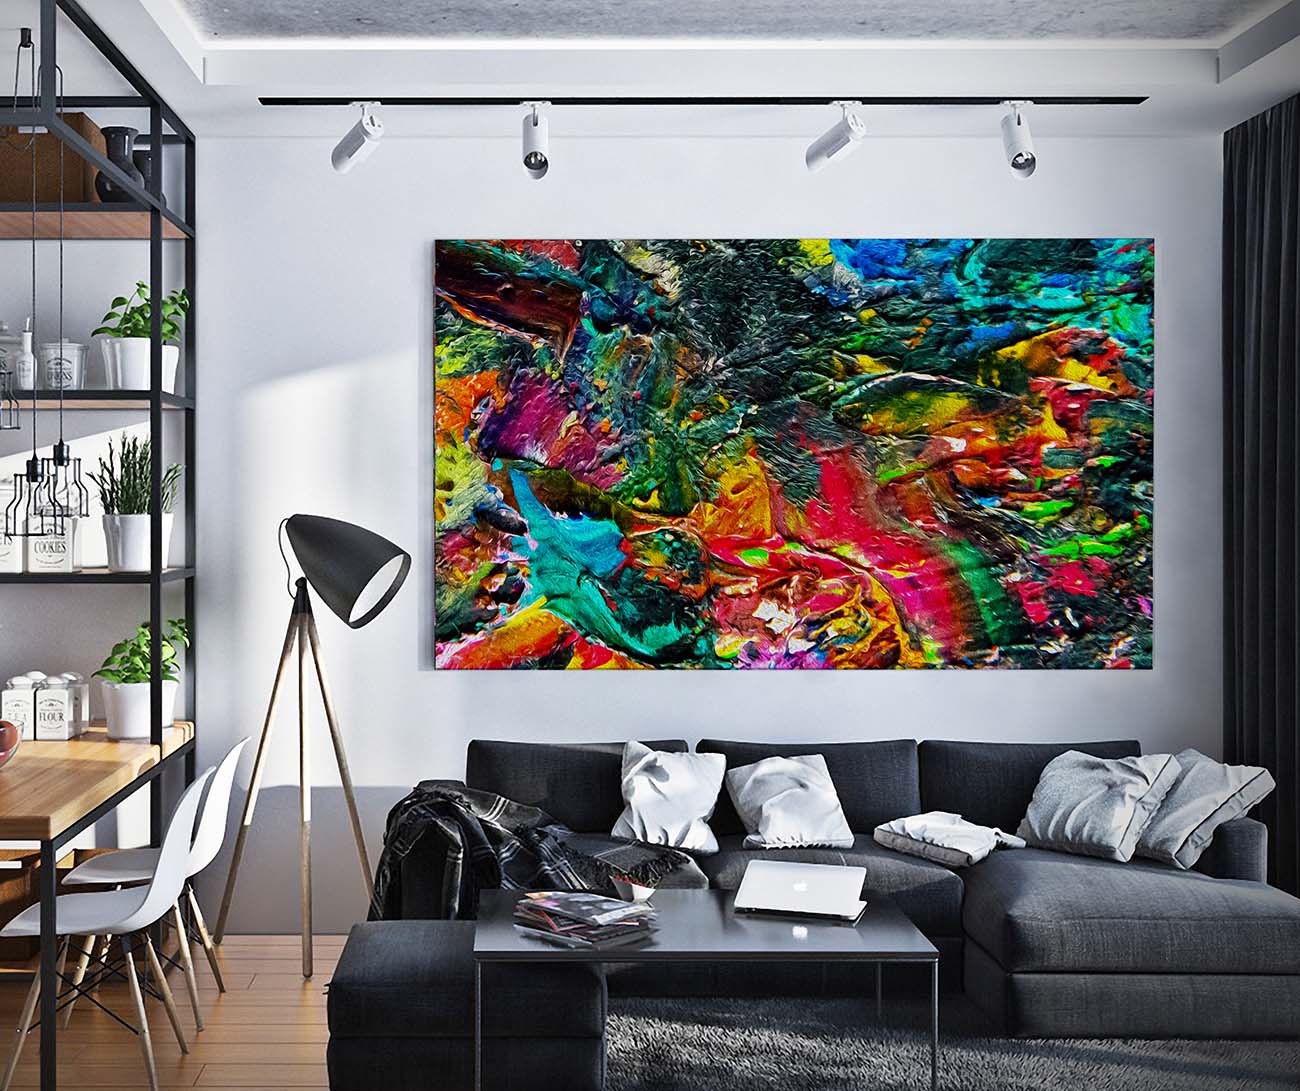 Watermelon Taffy abstract art  by Doug LaRue on a living room wall